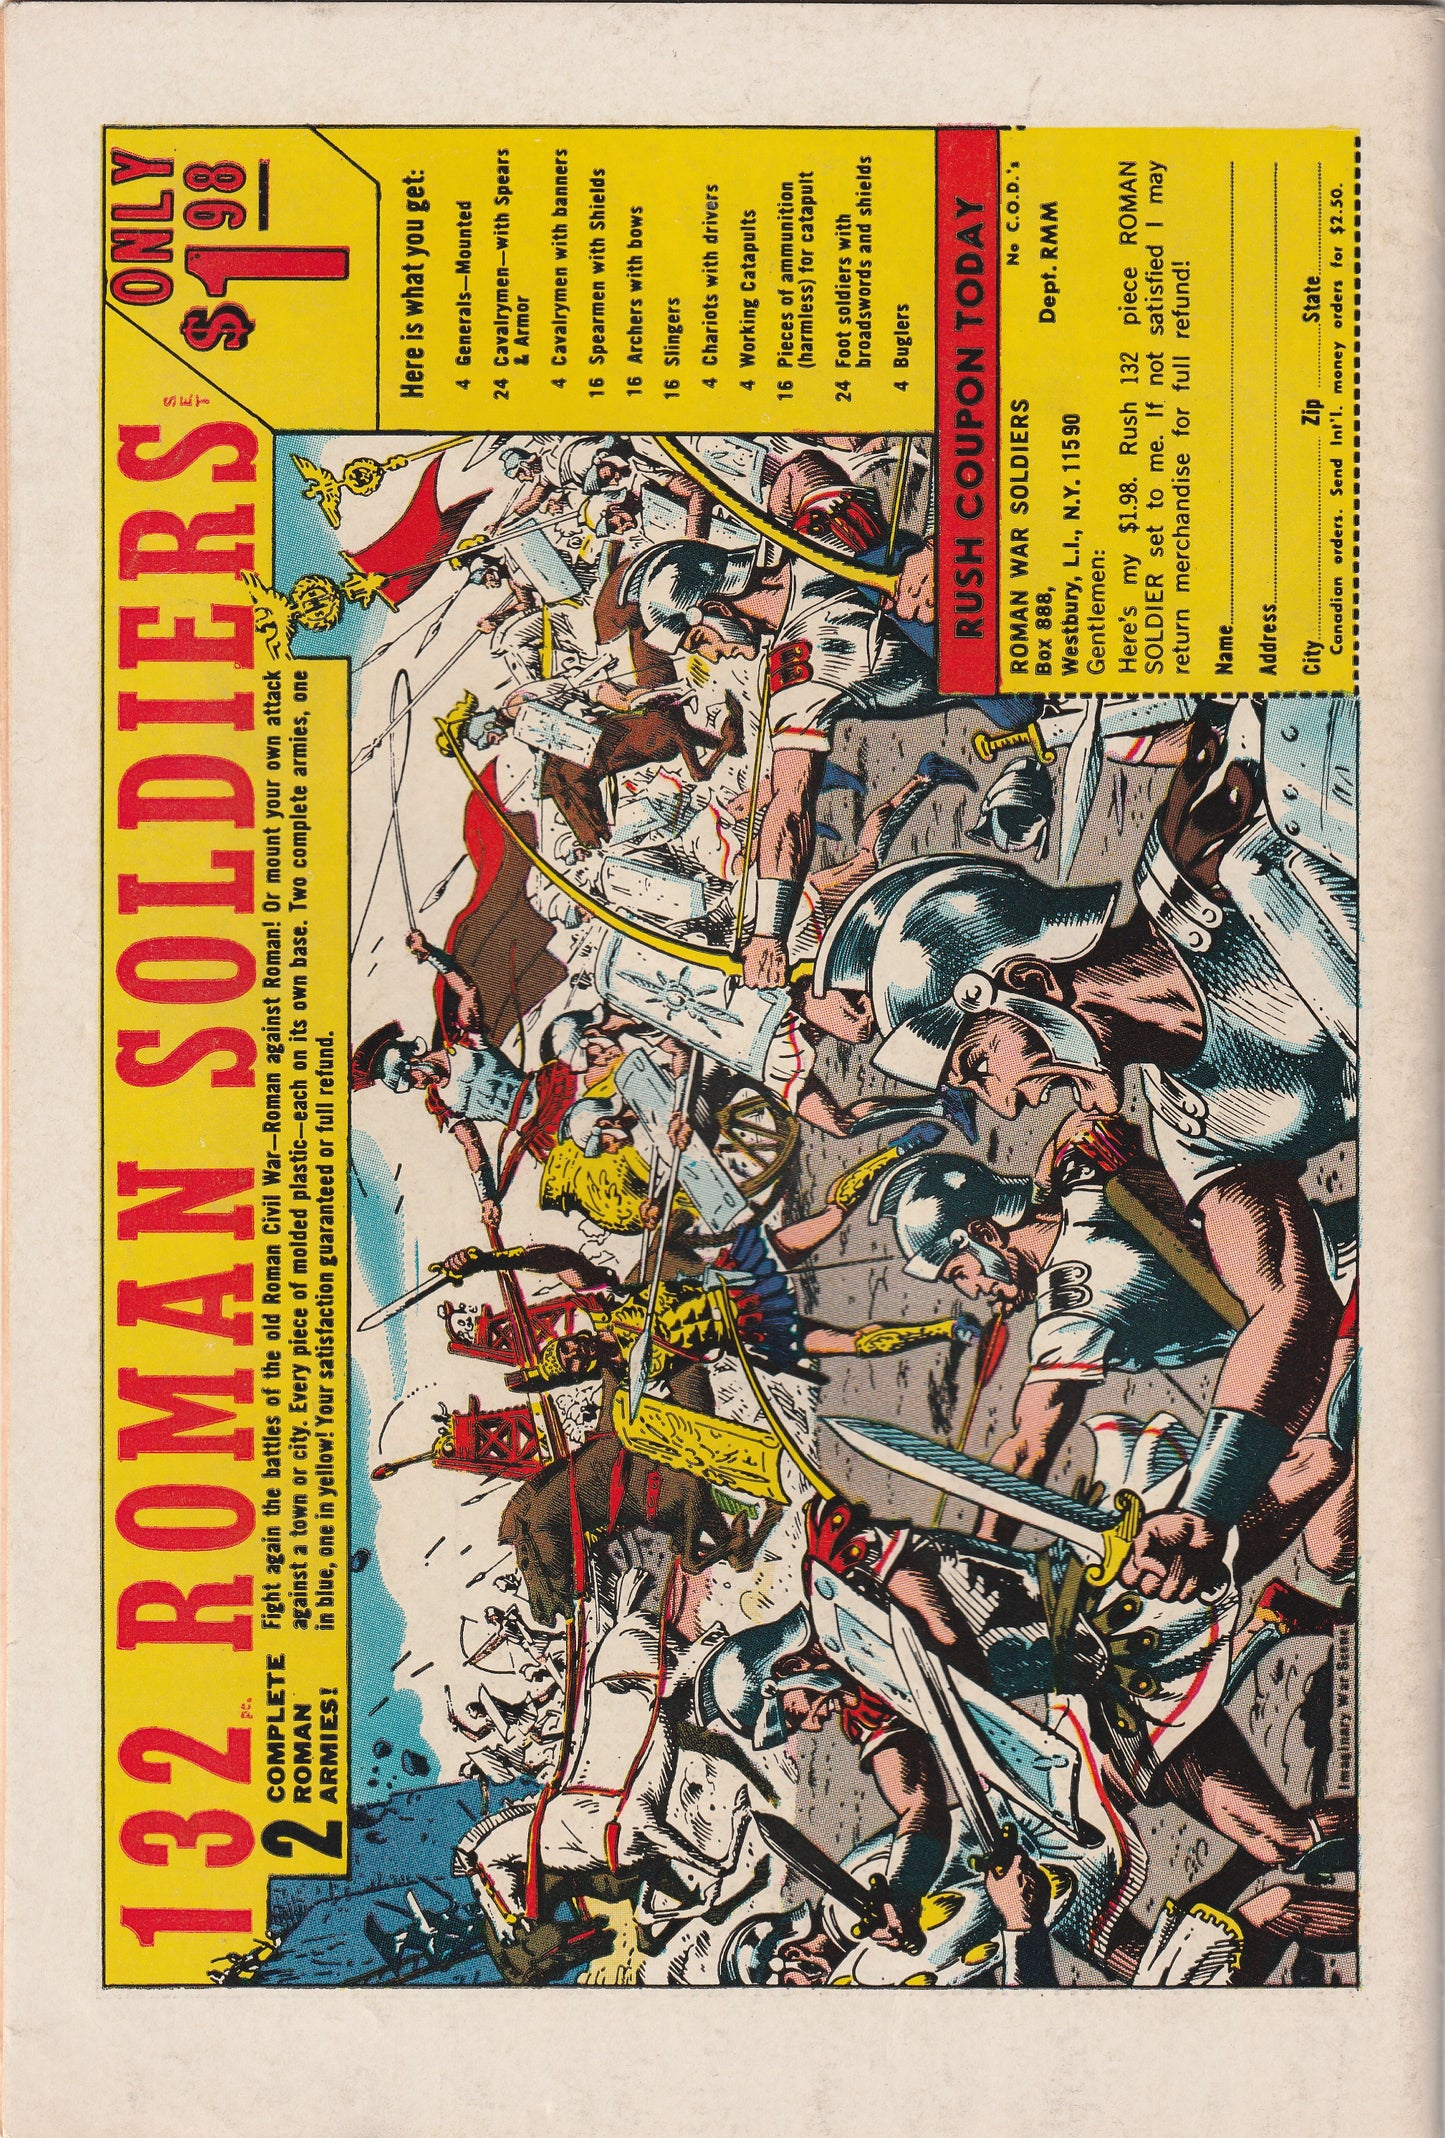 Daredevil #42 (1968) - 1st appearance of Jester